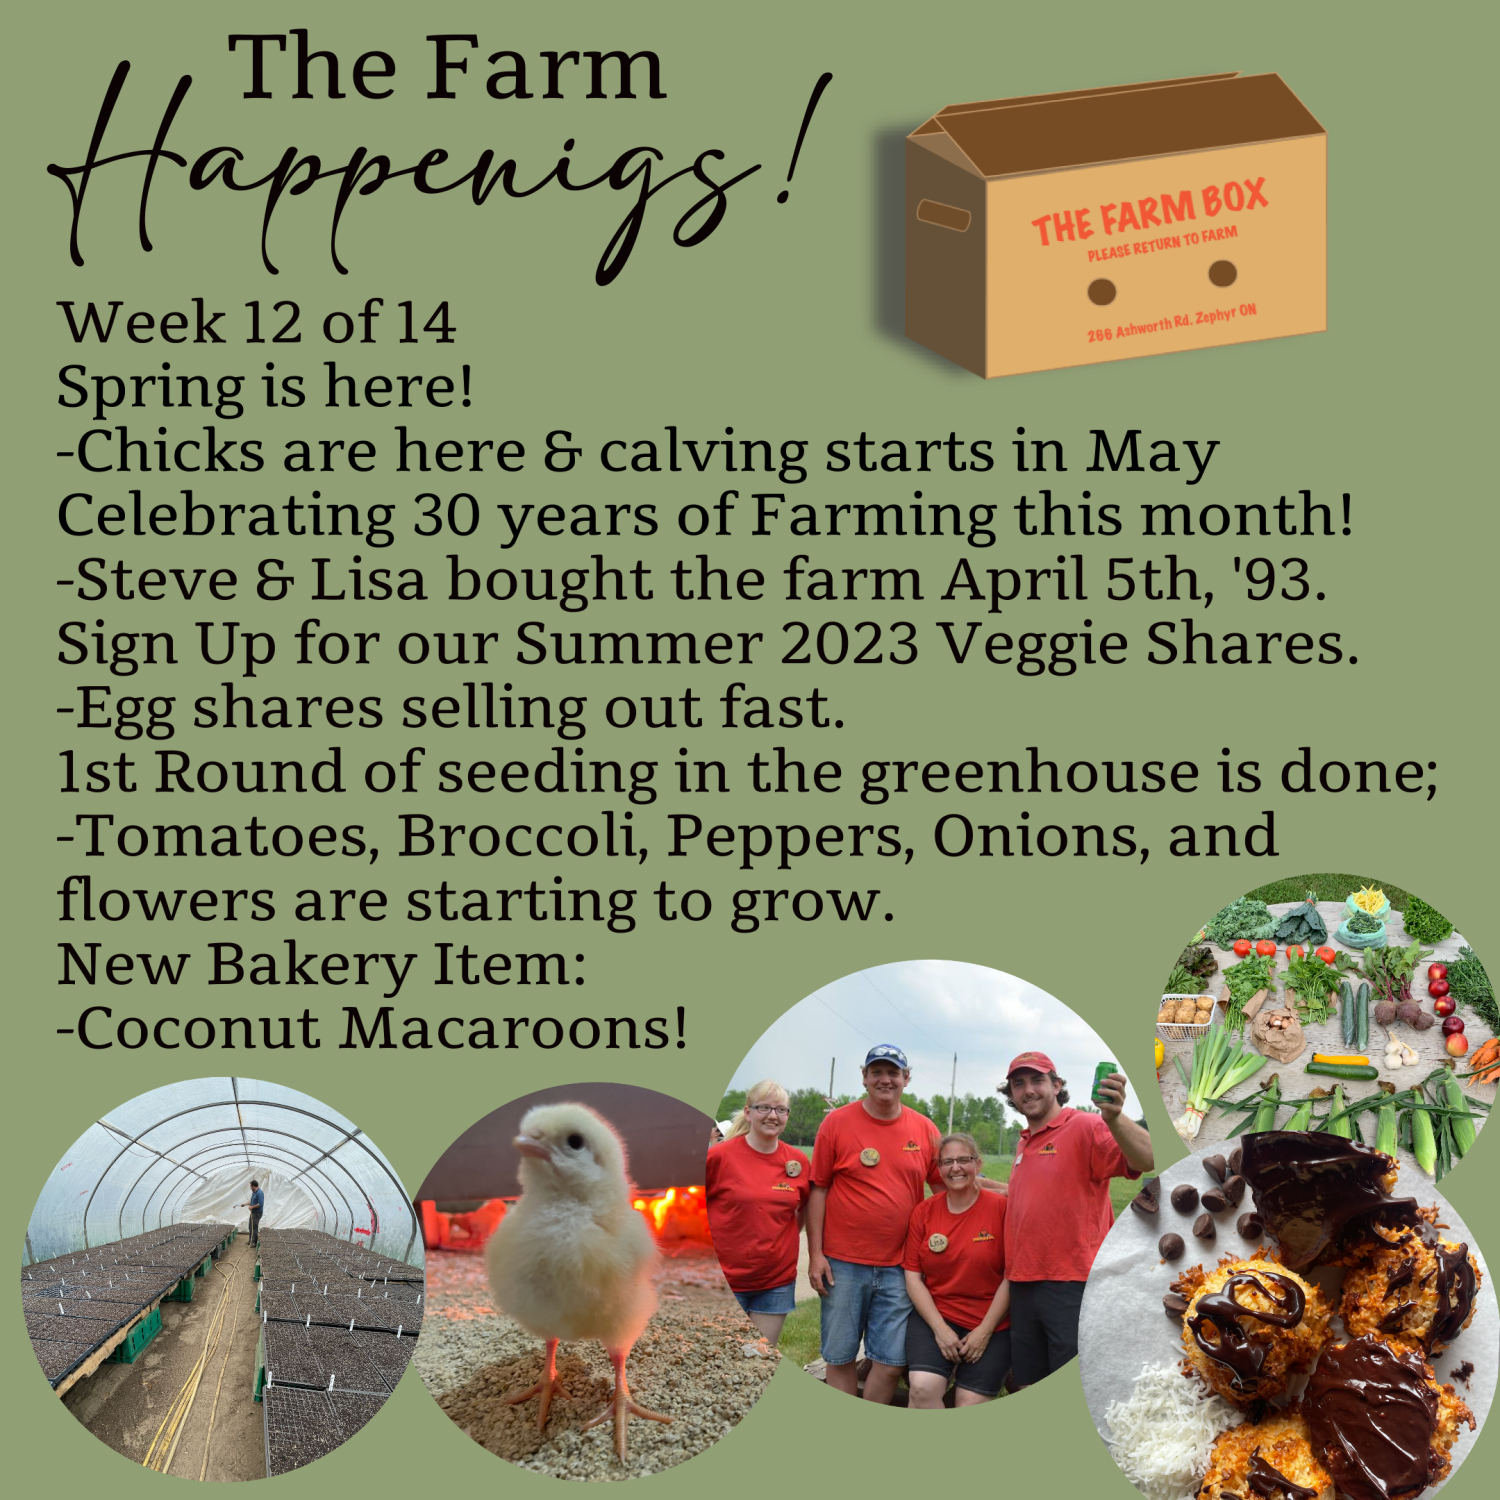 Next Happening: "The Farm Box"-Coopers CSA Farm Farm Happenings Winter/Spring Week 12